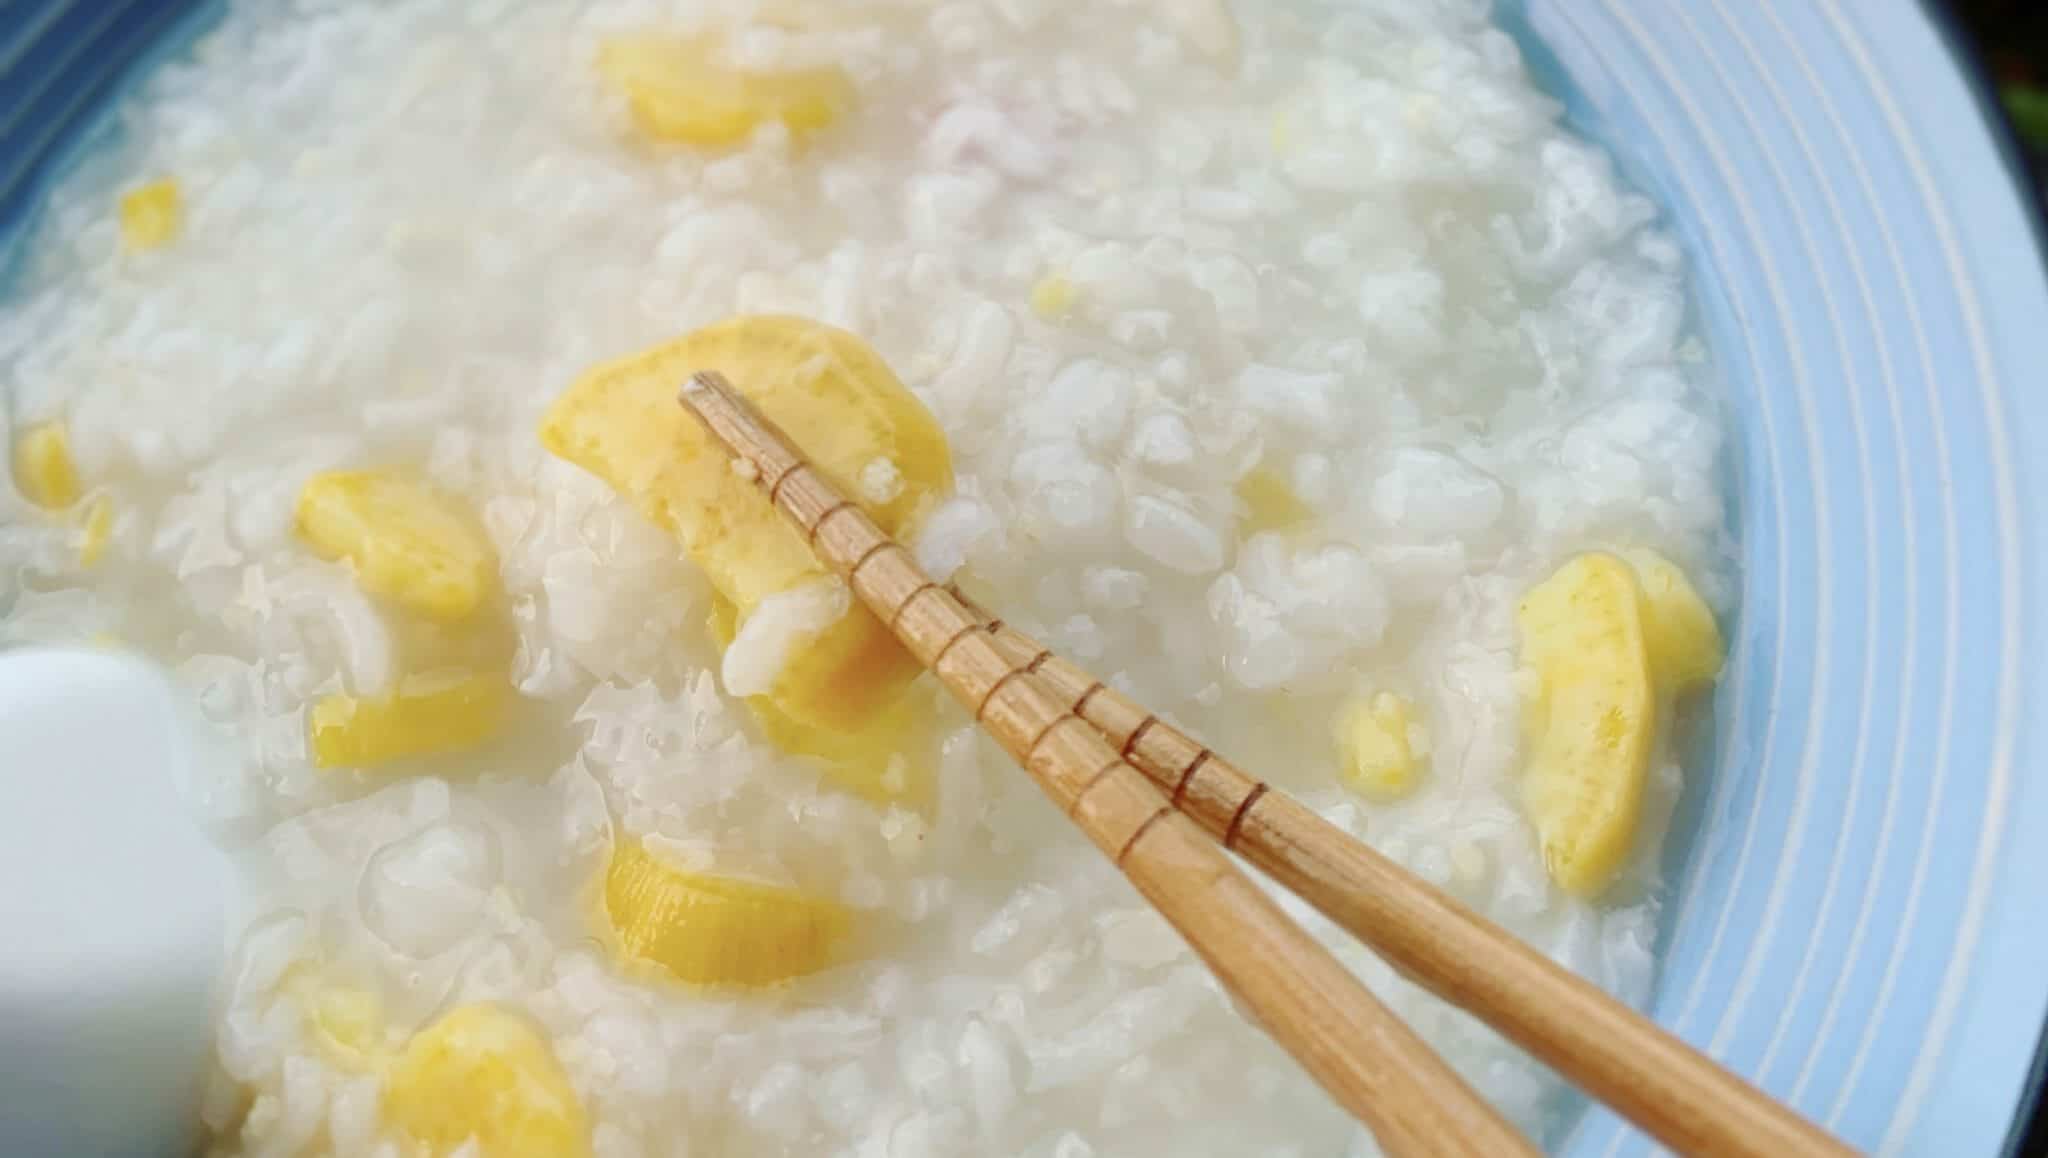 My Wok Life Cooking Blog - Superfood Sweet Potato Porridge 超级食物 - 番薯粥 (地瓜粥) -